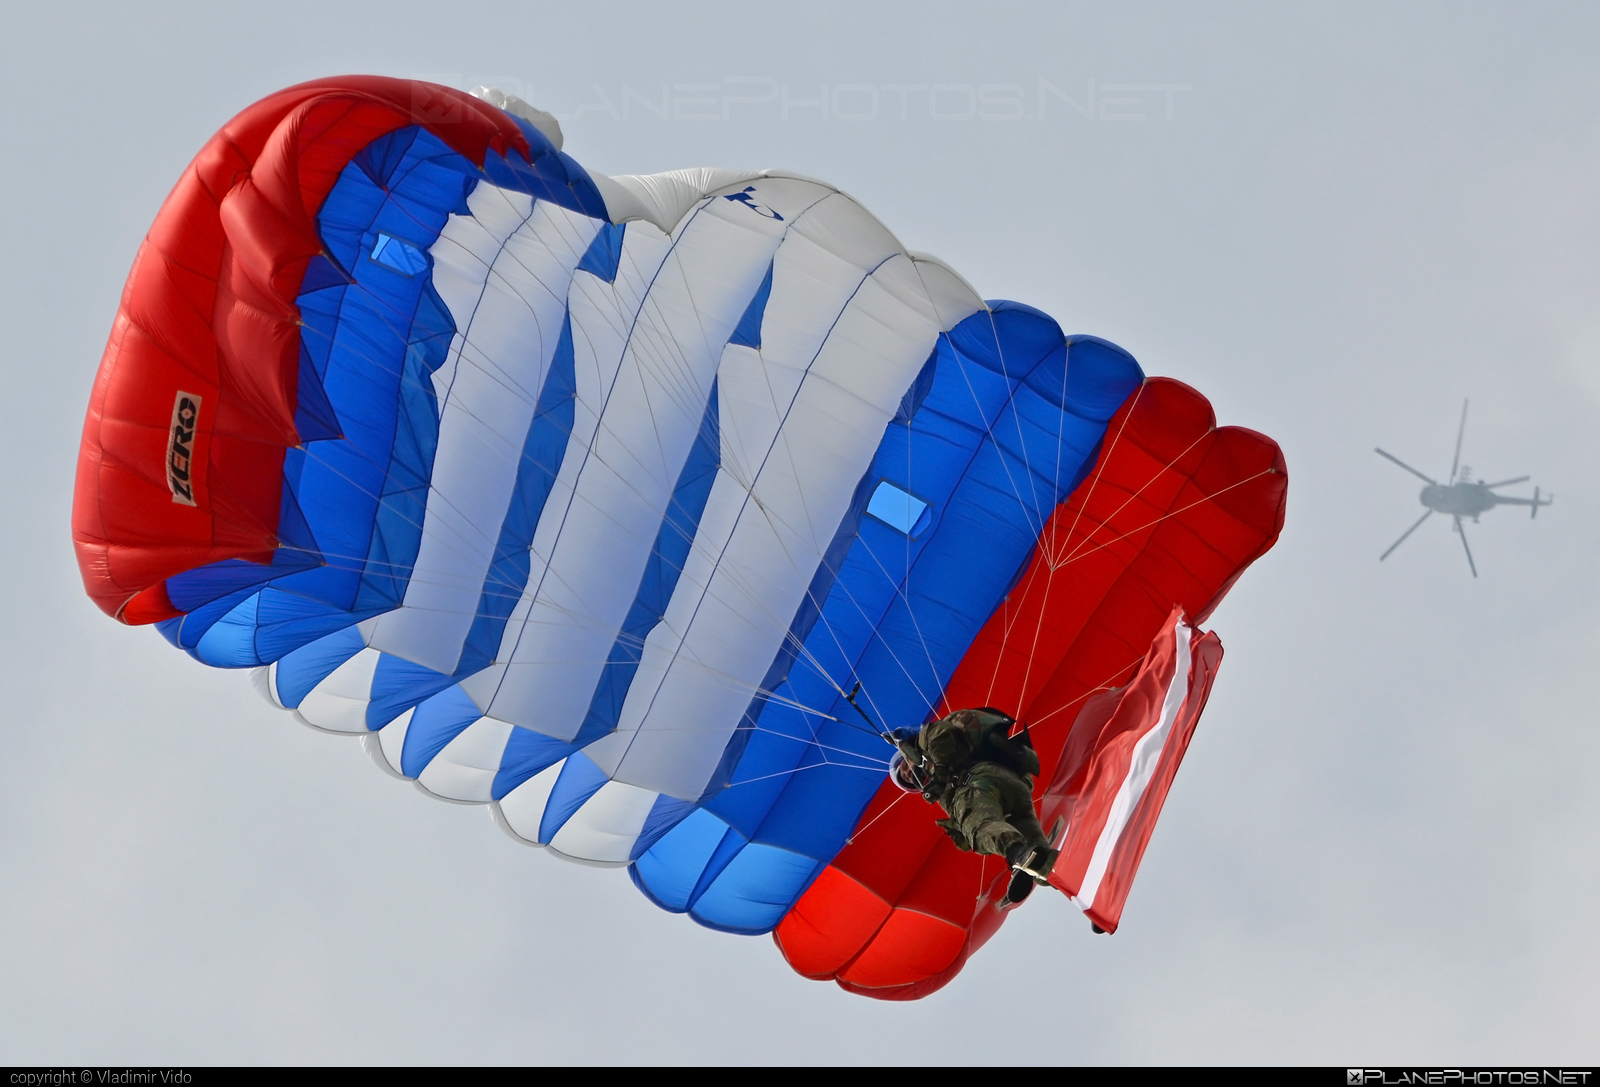 Parachute - No registration operated by Ozbrojené sily Slovenskej republiky (Slovak Armed Forces) #ossr #ozbrojenesilysr #slovakarmedforces